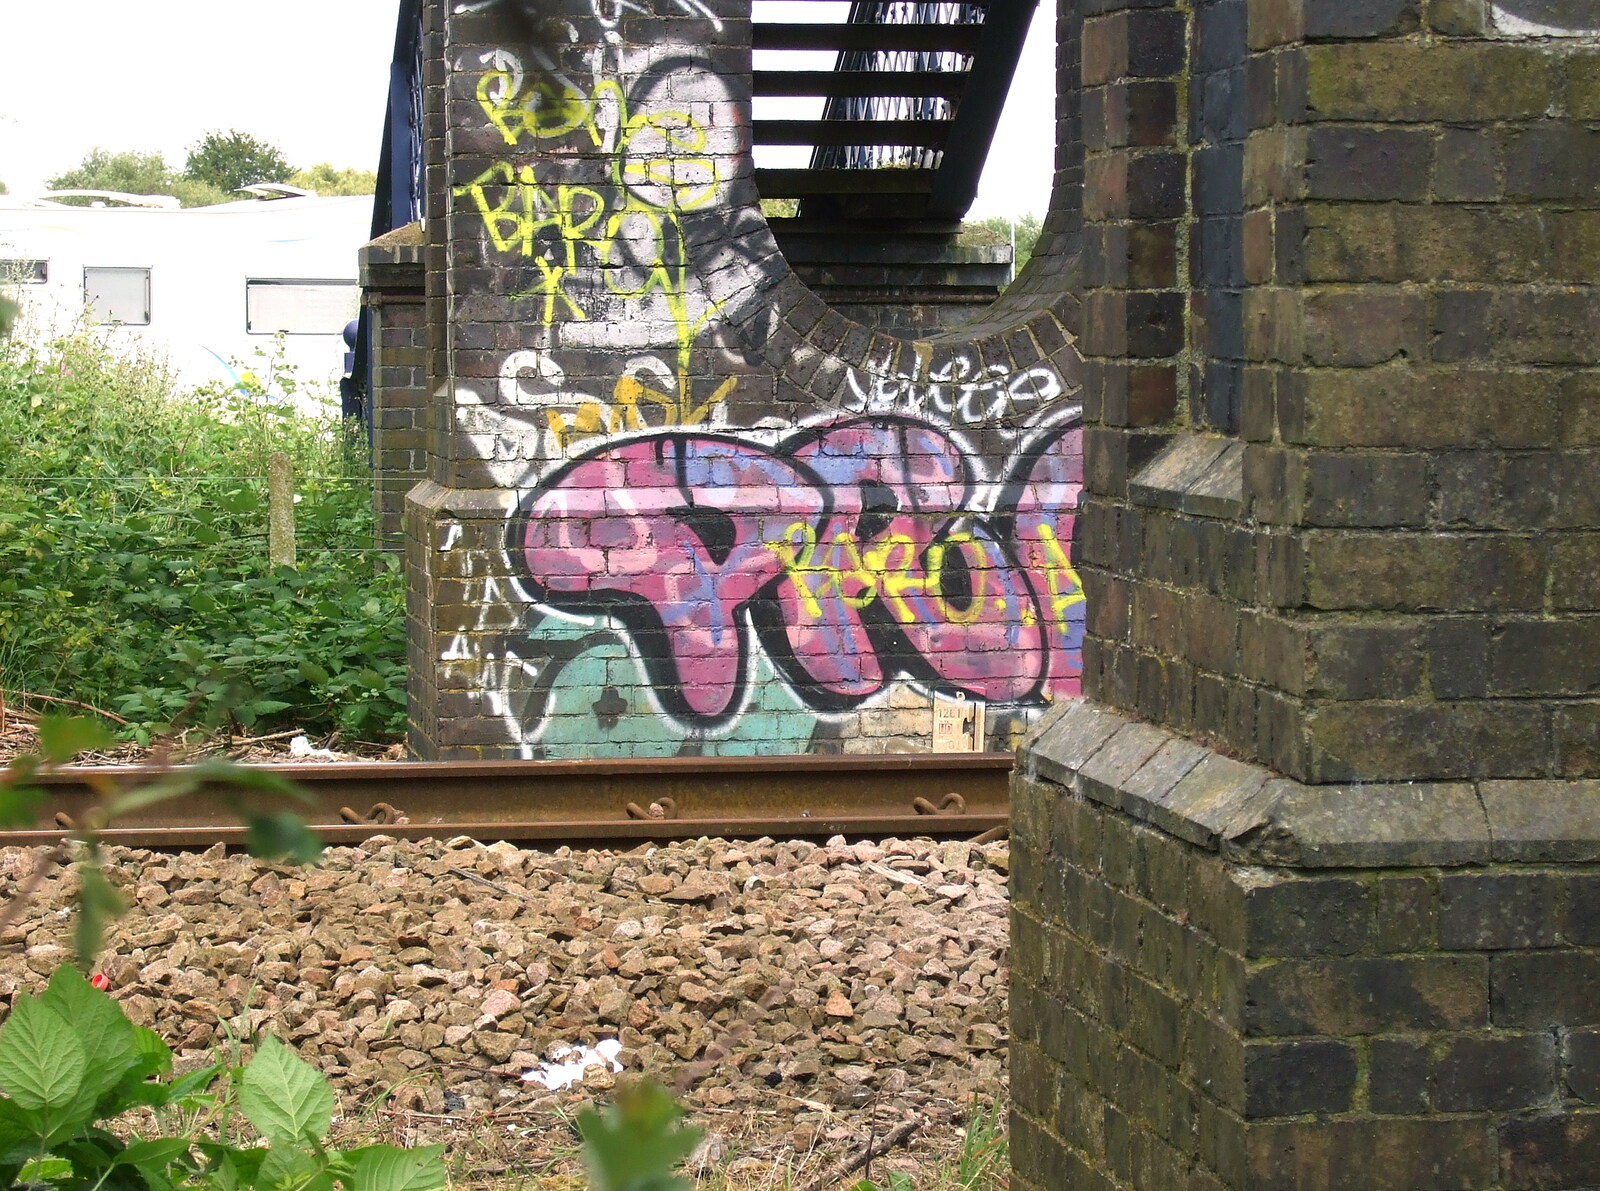 More graffiti by the railway from The Cambridge Folk Festival, Cherry Hinton, Cambridge - 28th July 2012